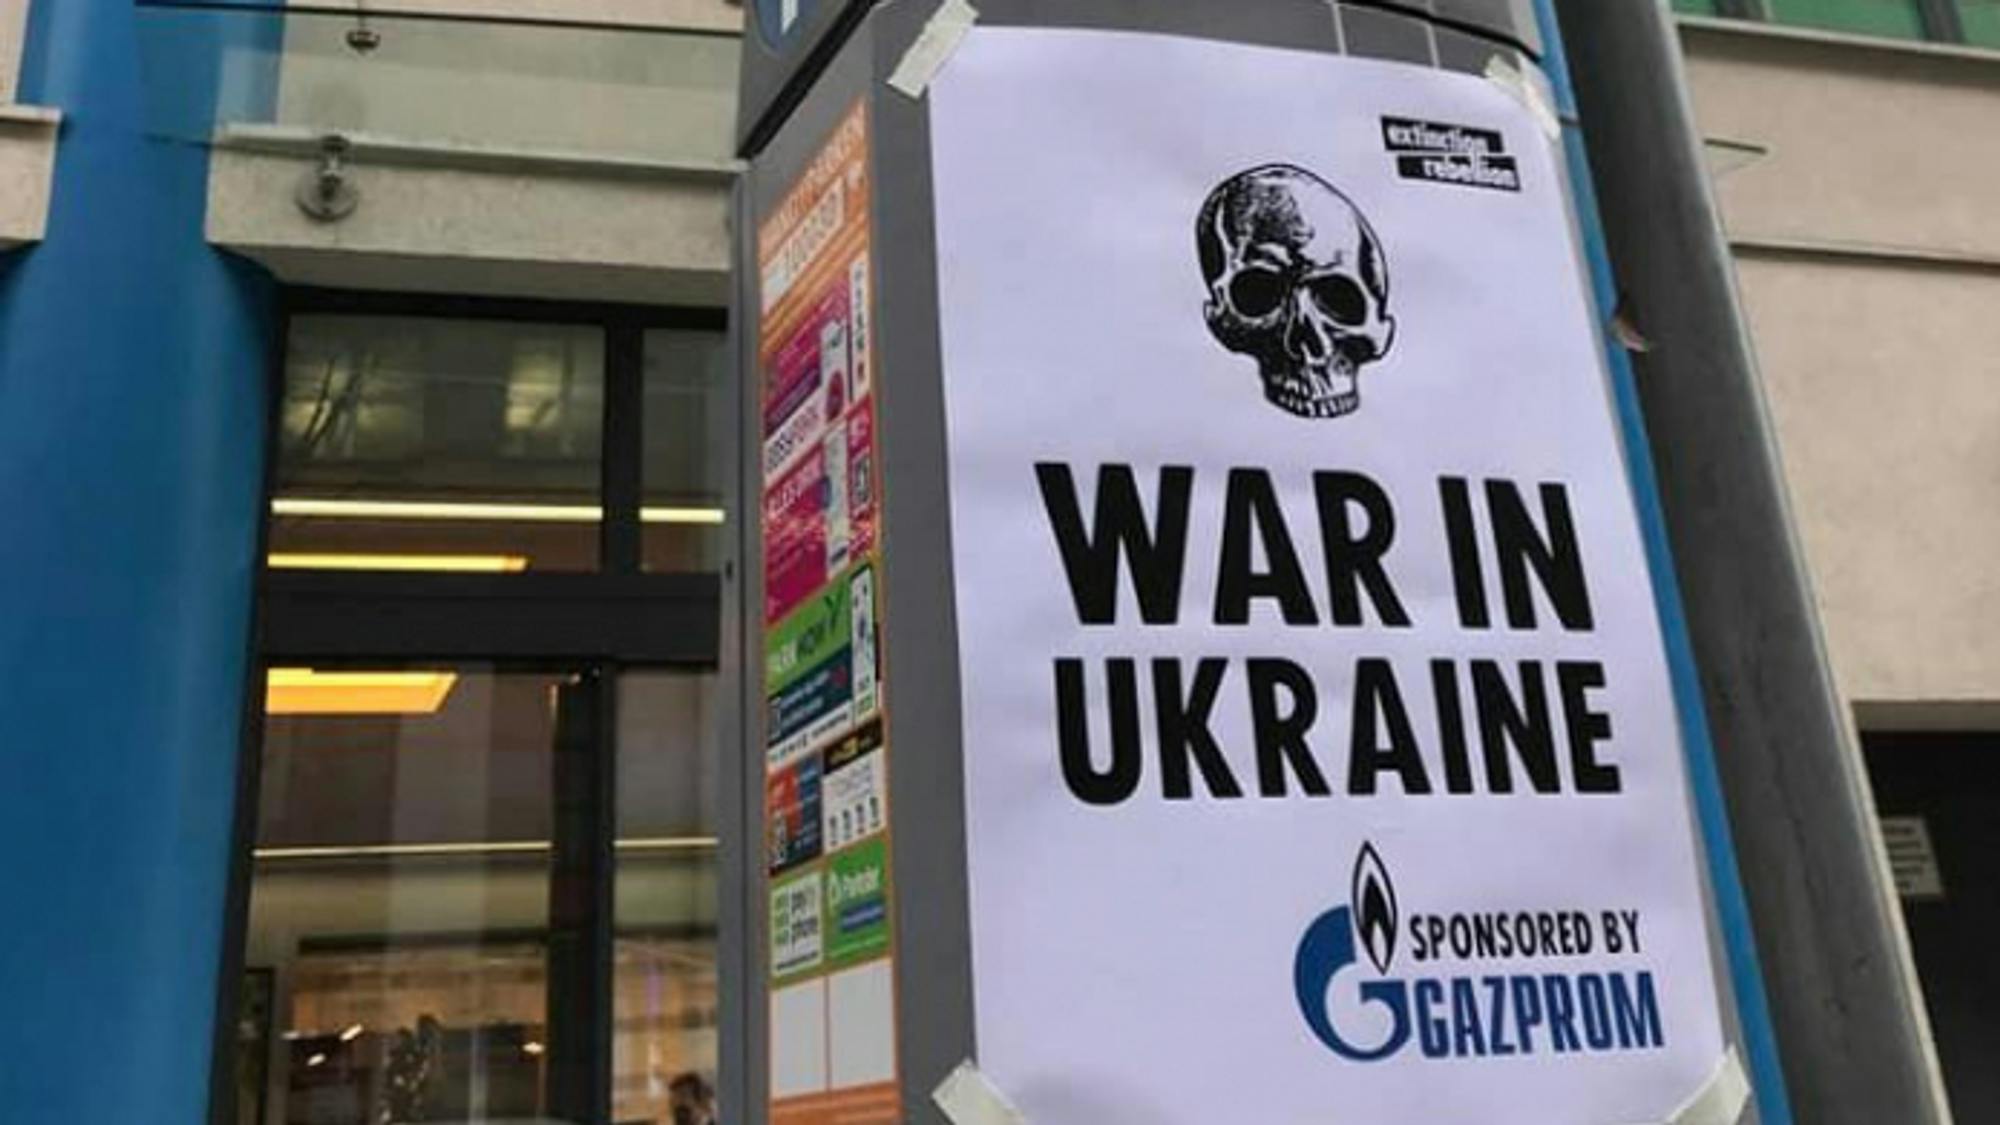 Poster by Extinction Rebellion reading "War in Ukraine – sponsored by Gazprom"